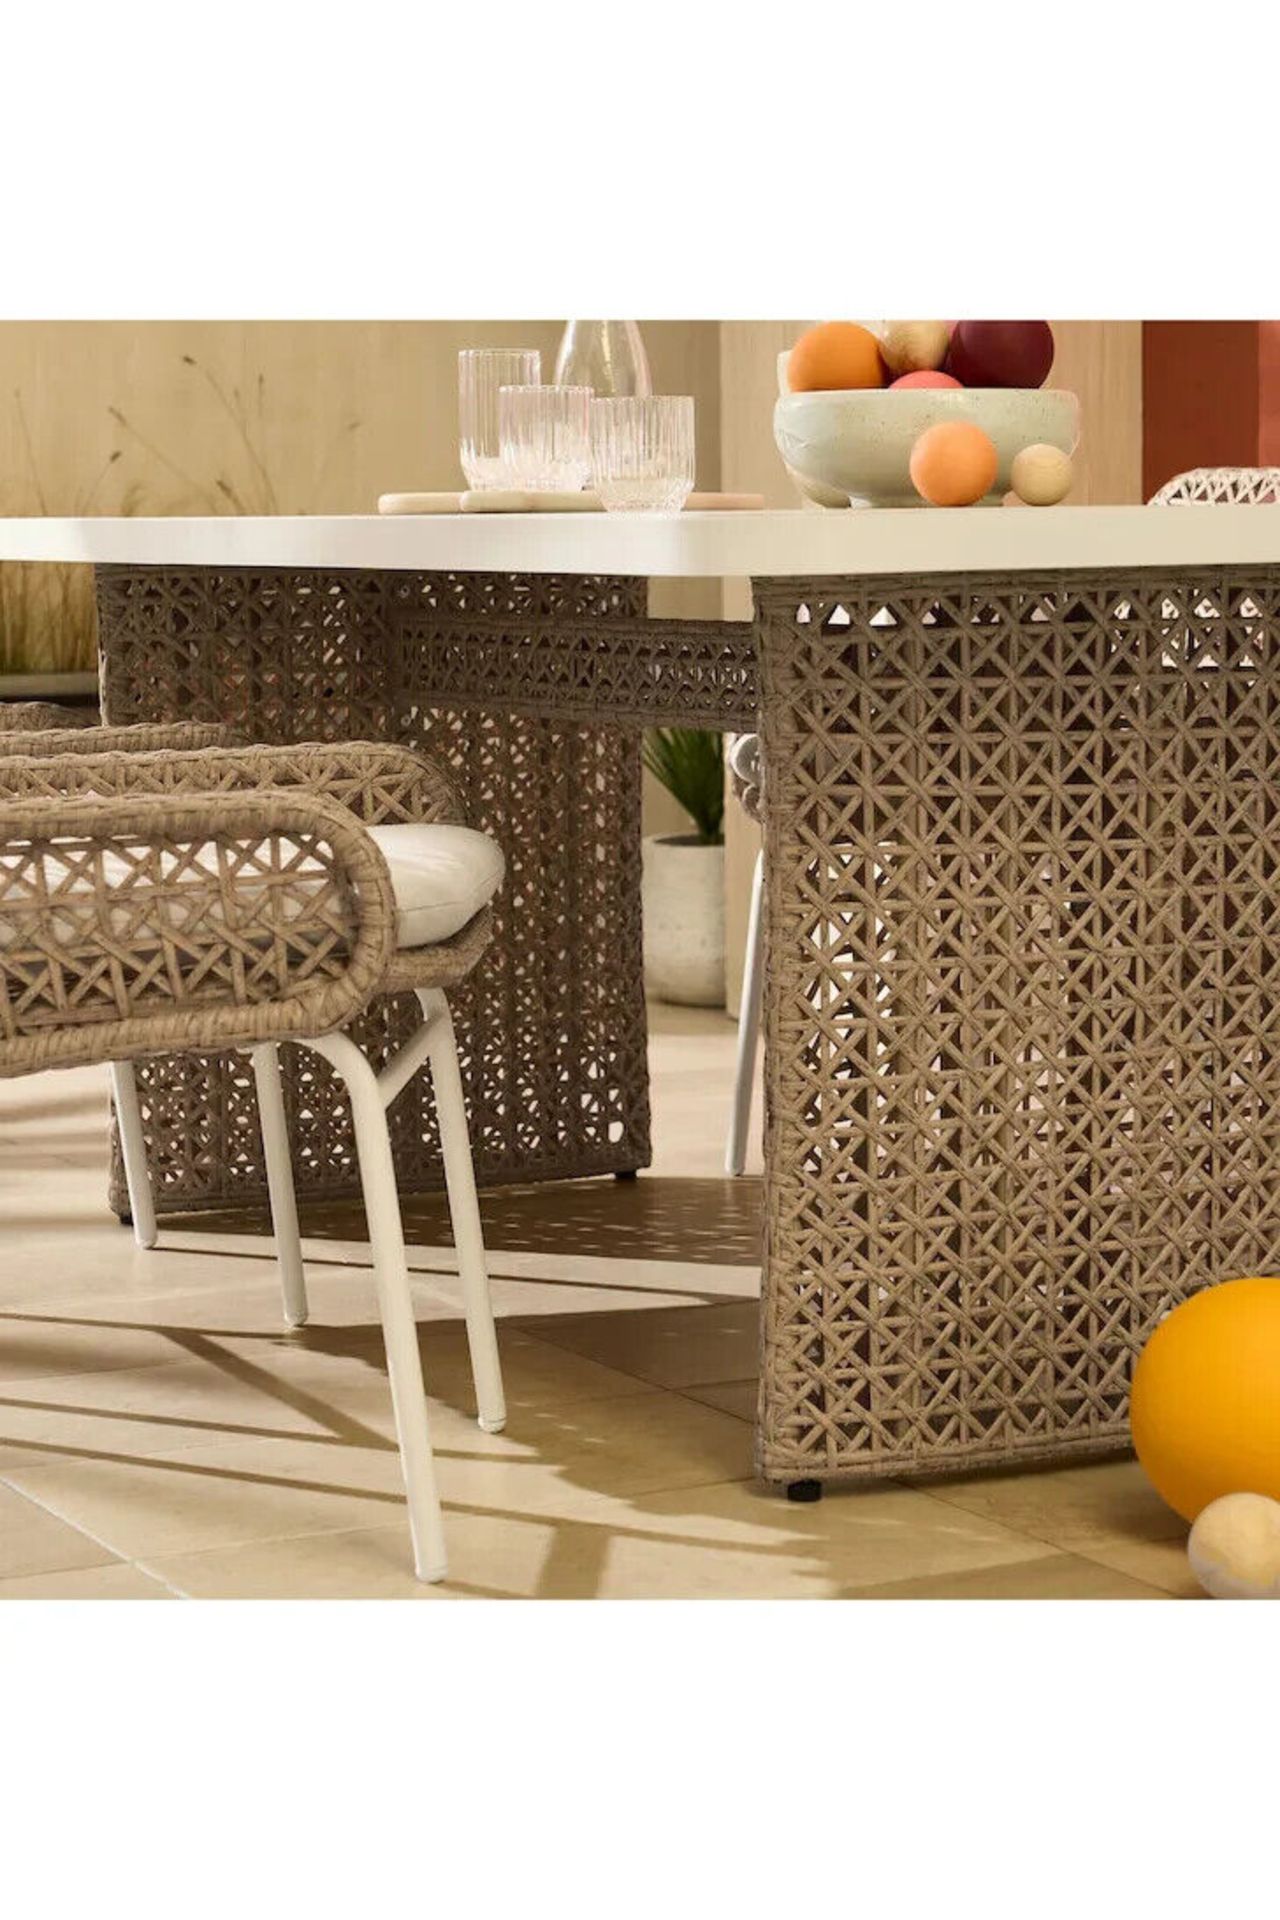 Brand New & Boxed Made.Com Rhonda Garden Dining Set Aluminium w/ Table & Cushions. RRP £1,299.00. - Image 3 of 6